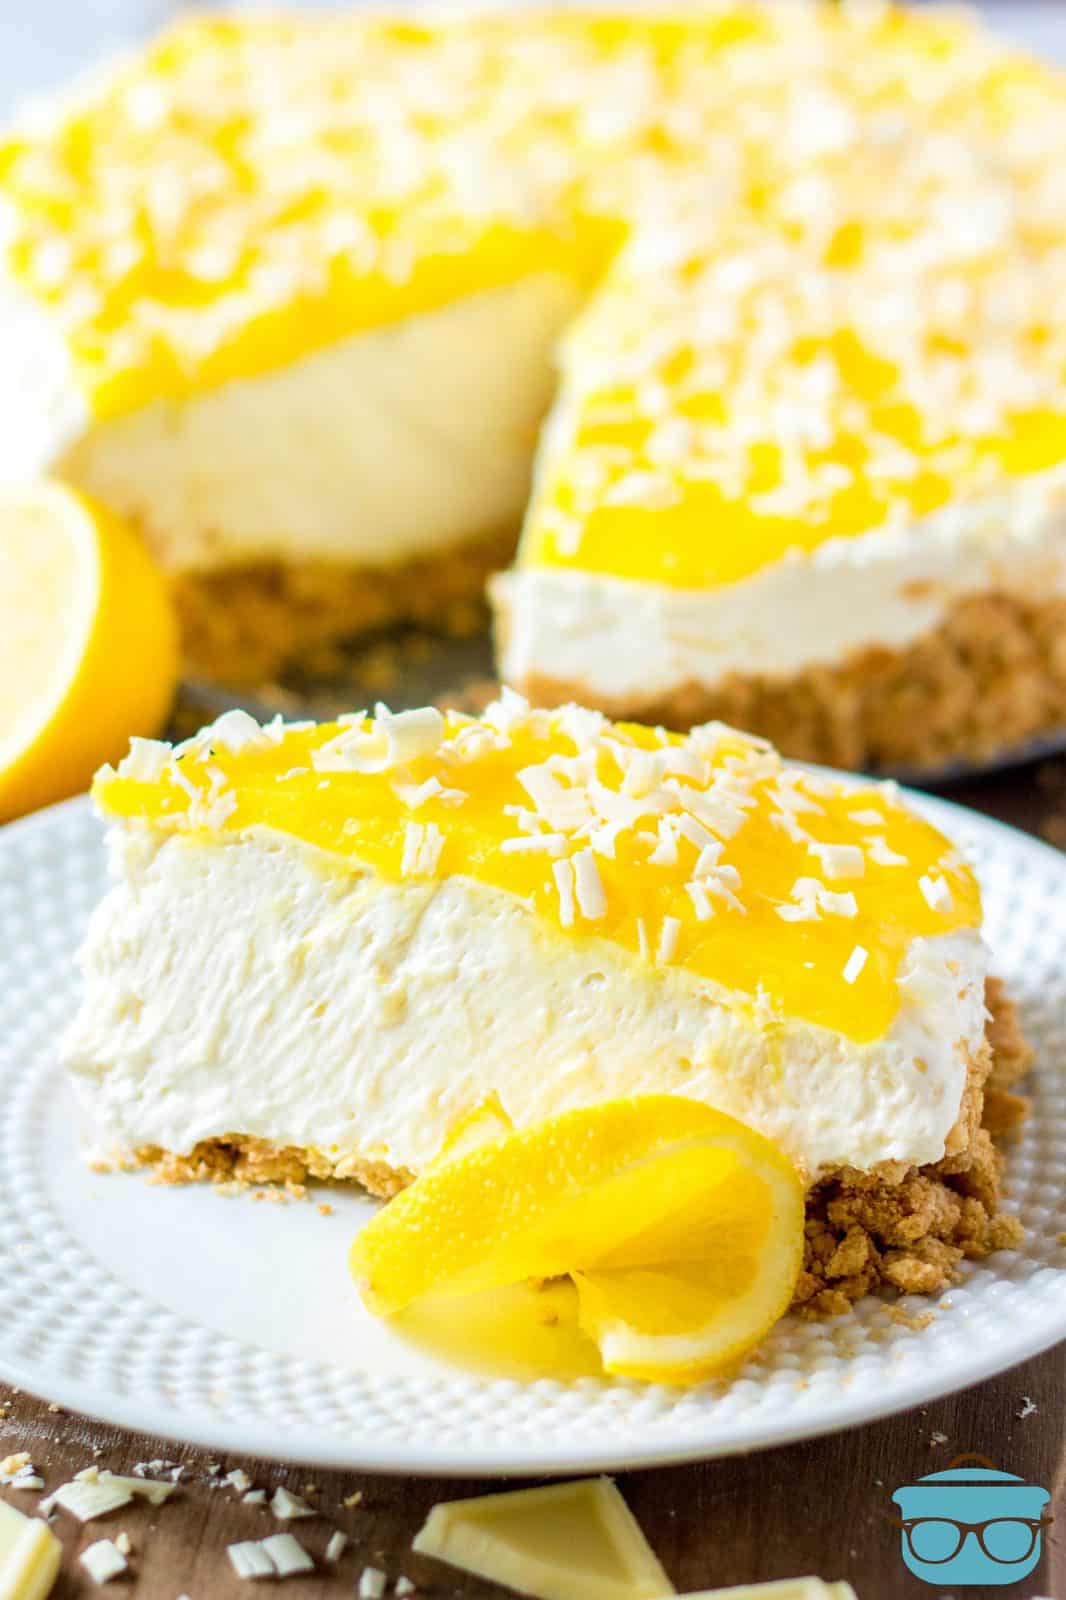 Slice of No-Bake Lemon White Chocolate Cheesecake on white plate with slice of lemon.